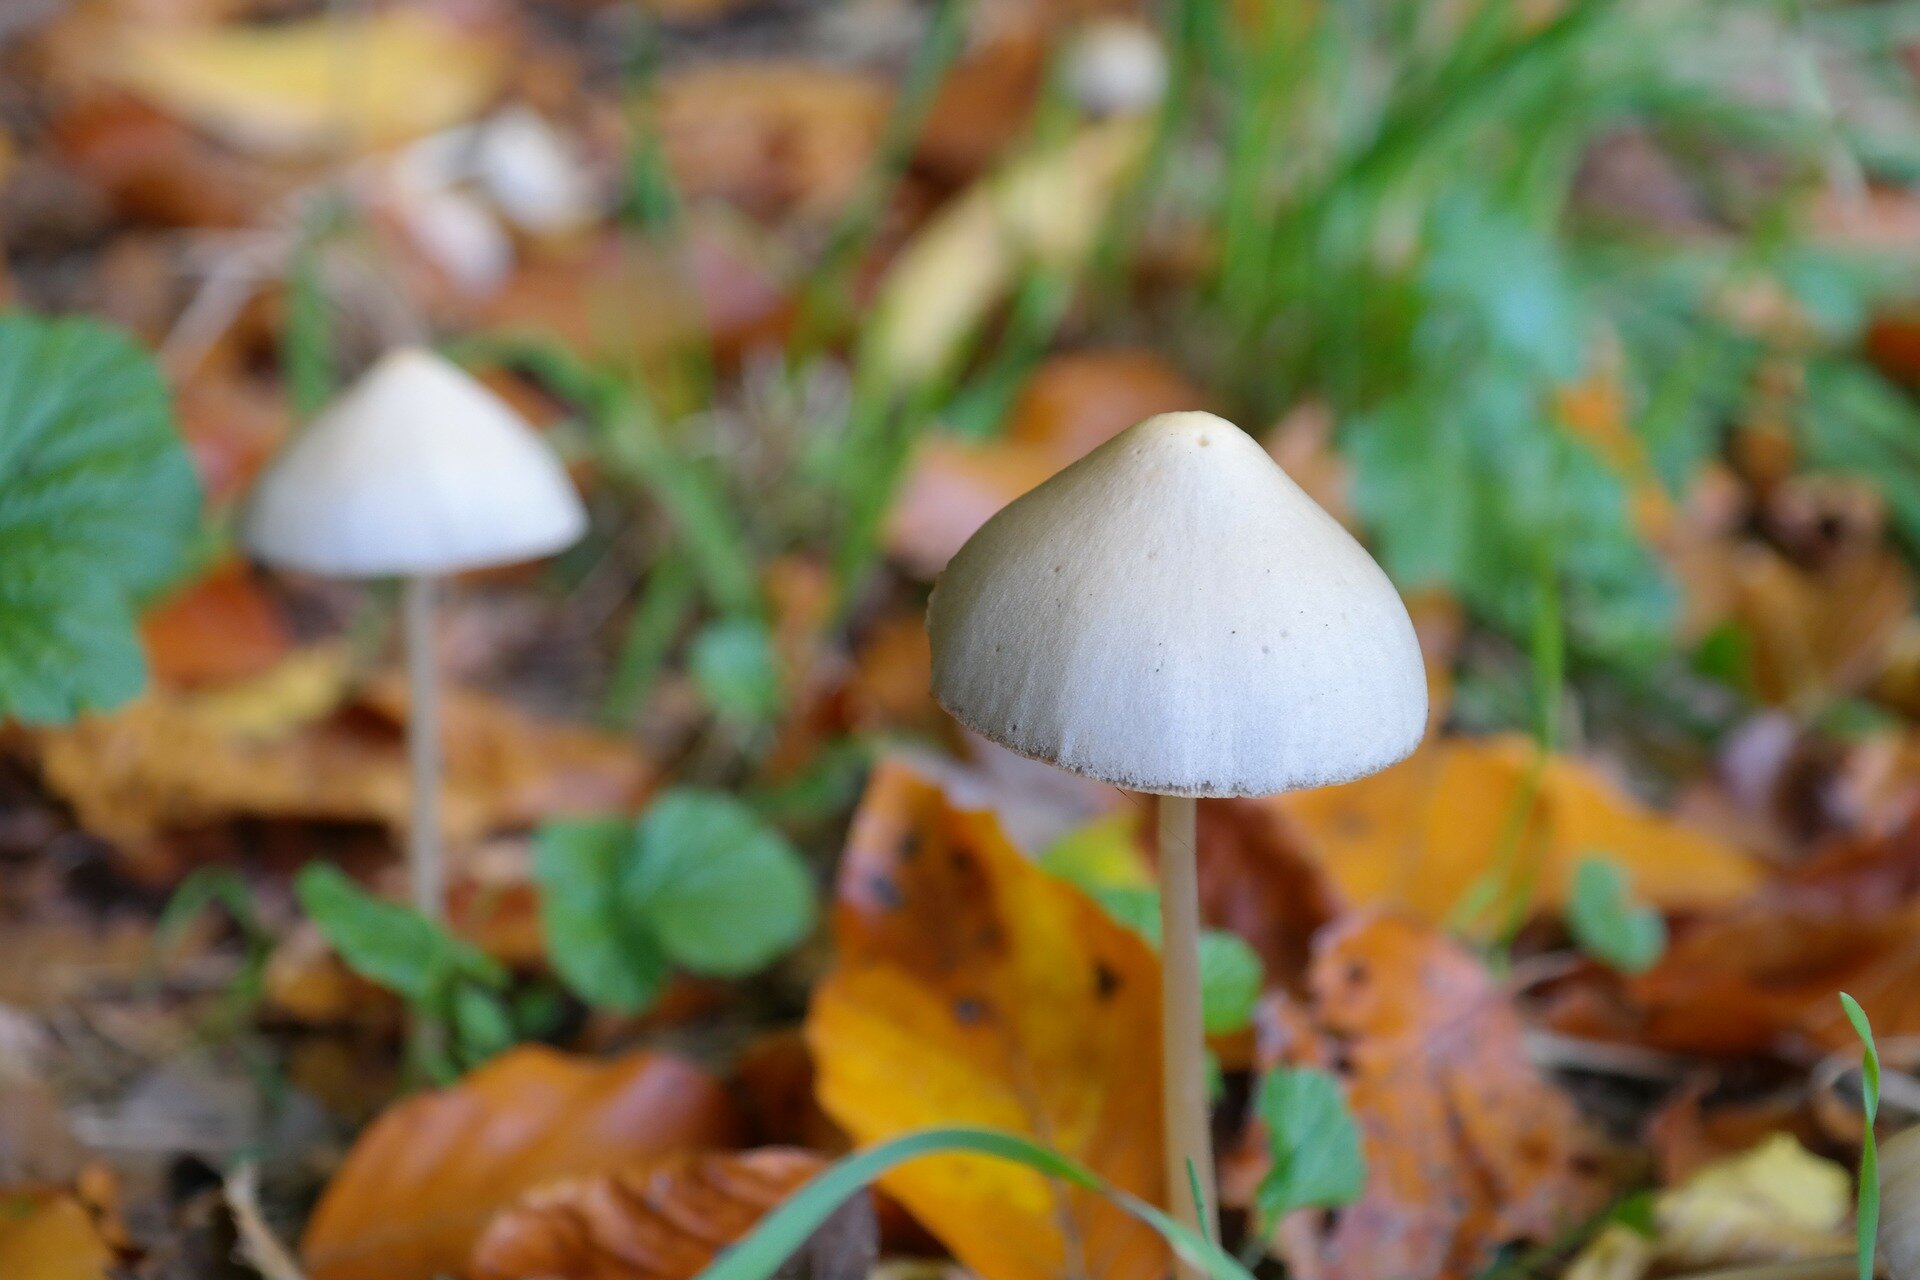 #Psychedelic ‘magic mushroom’ drug may ease some depression